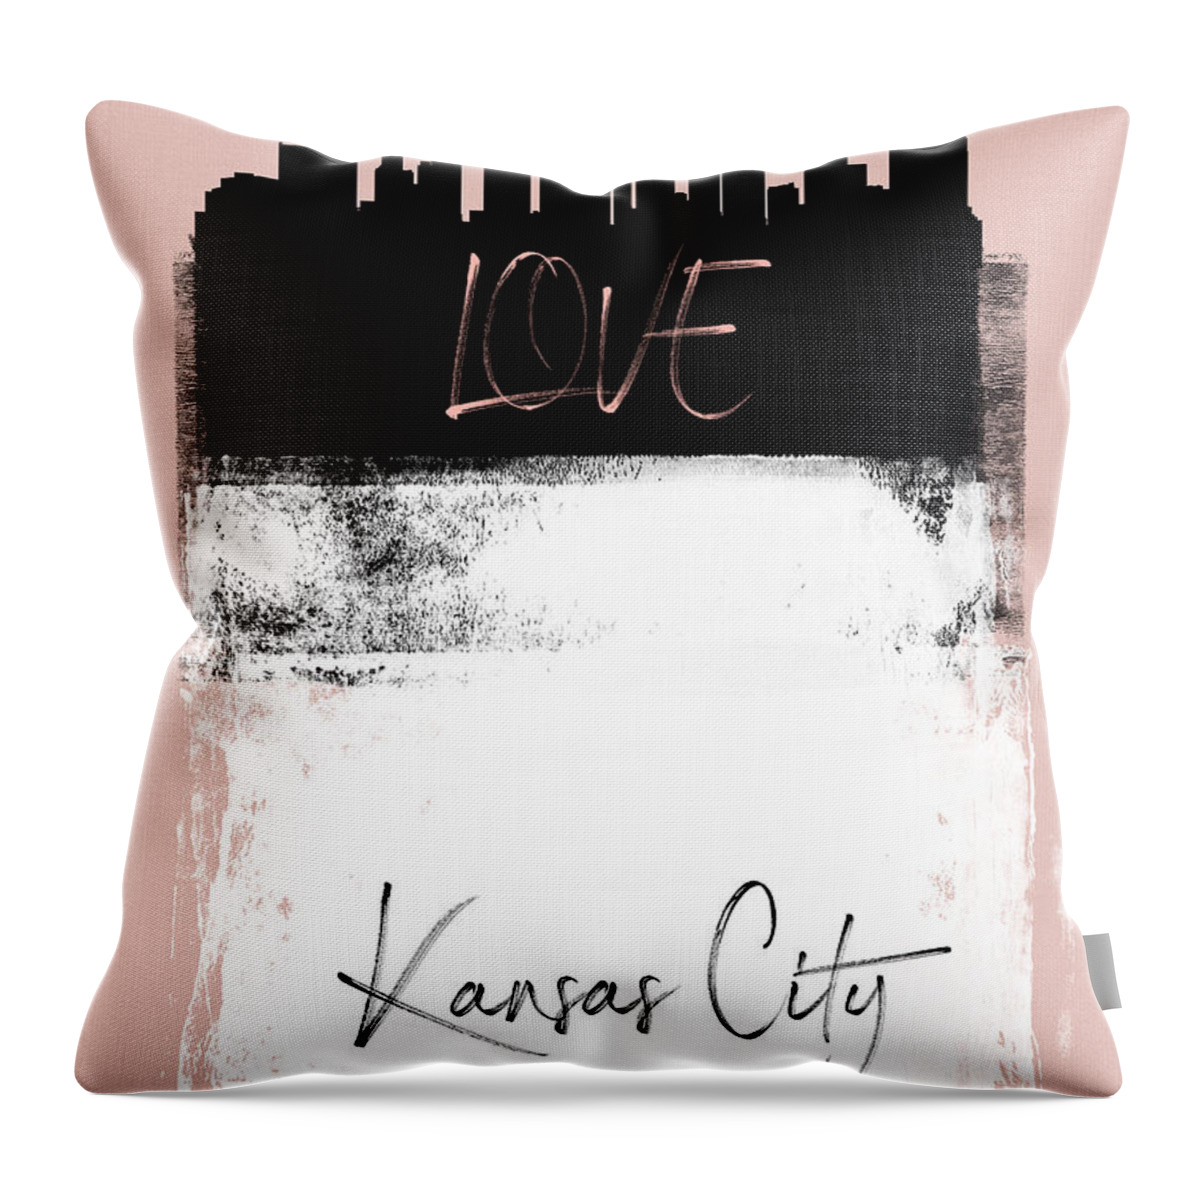 Kansas City Throw Pillow featuring the mixed media Love Kansas City by Naxart Studio